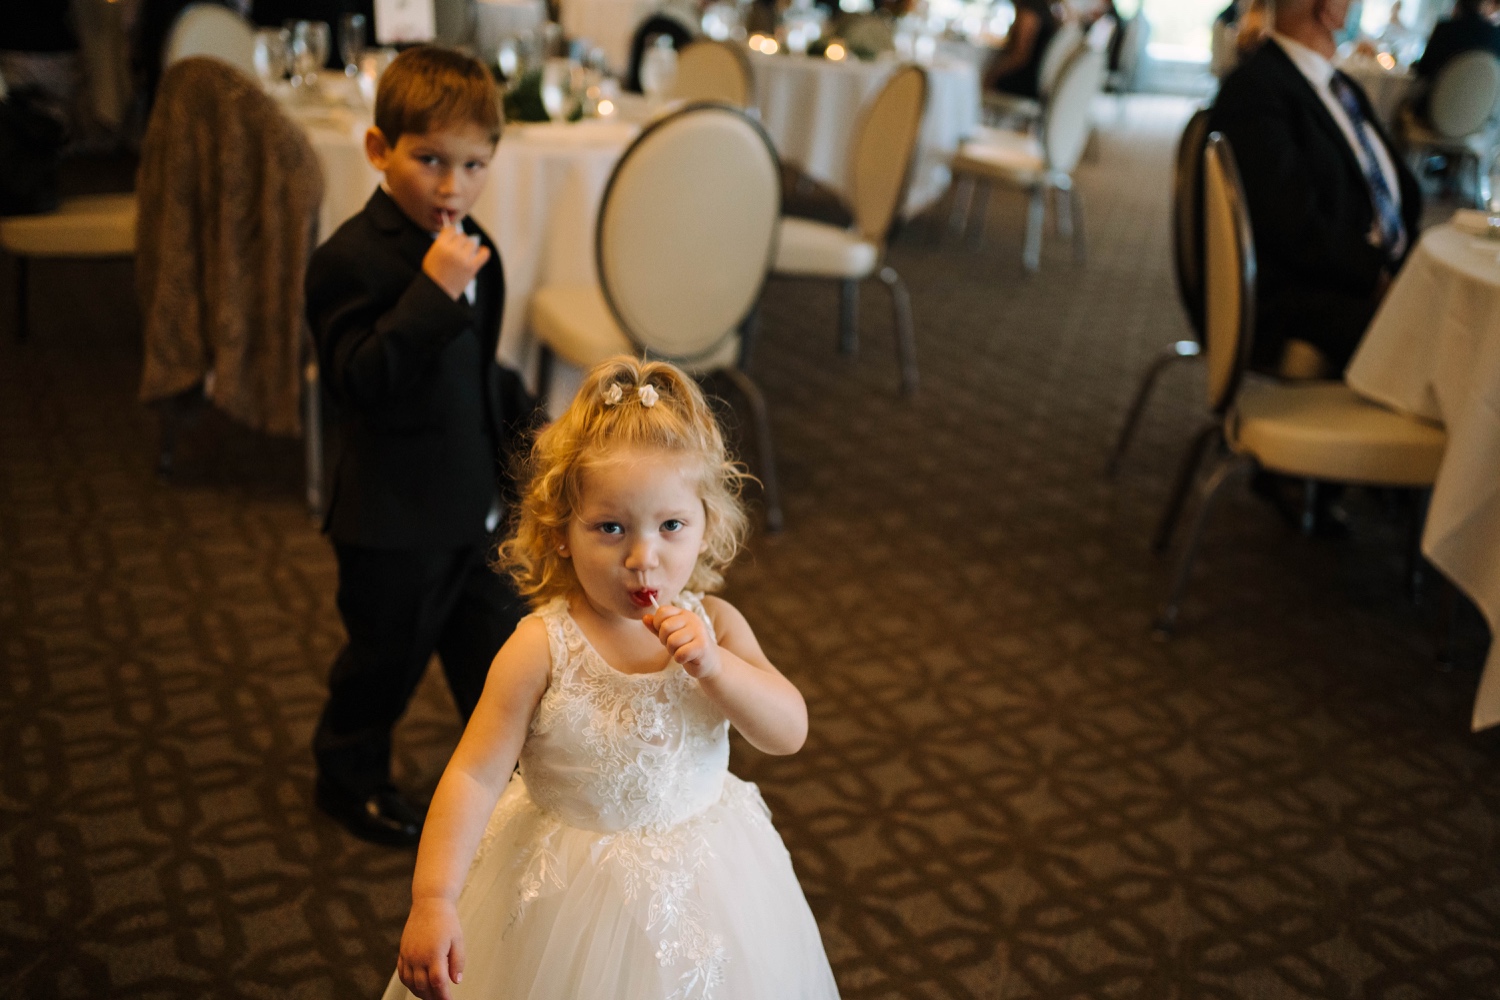 children eating suckers at wedding reception